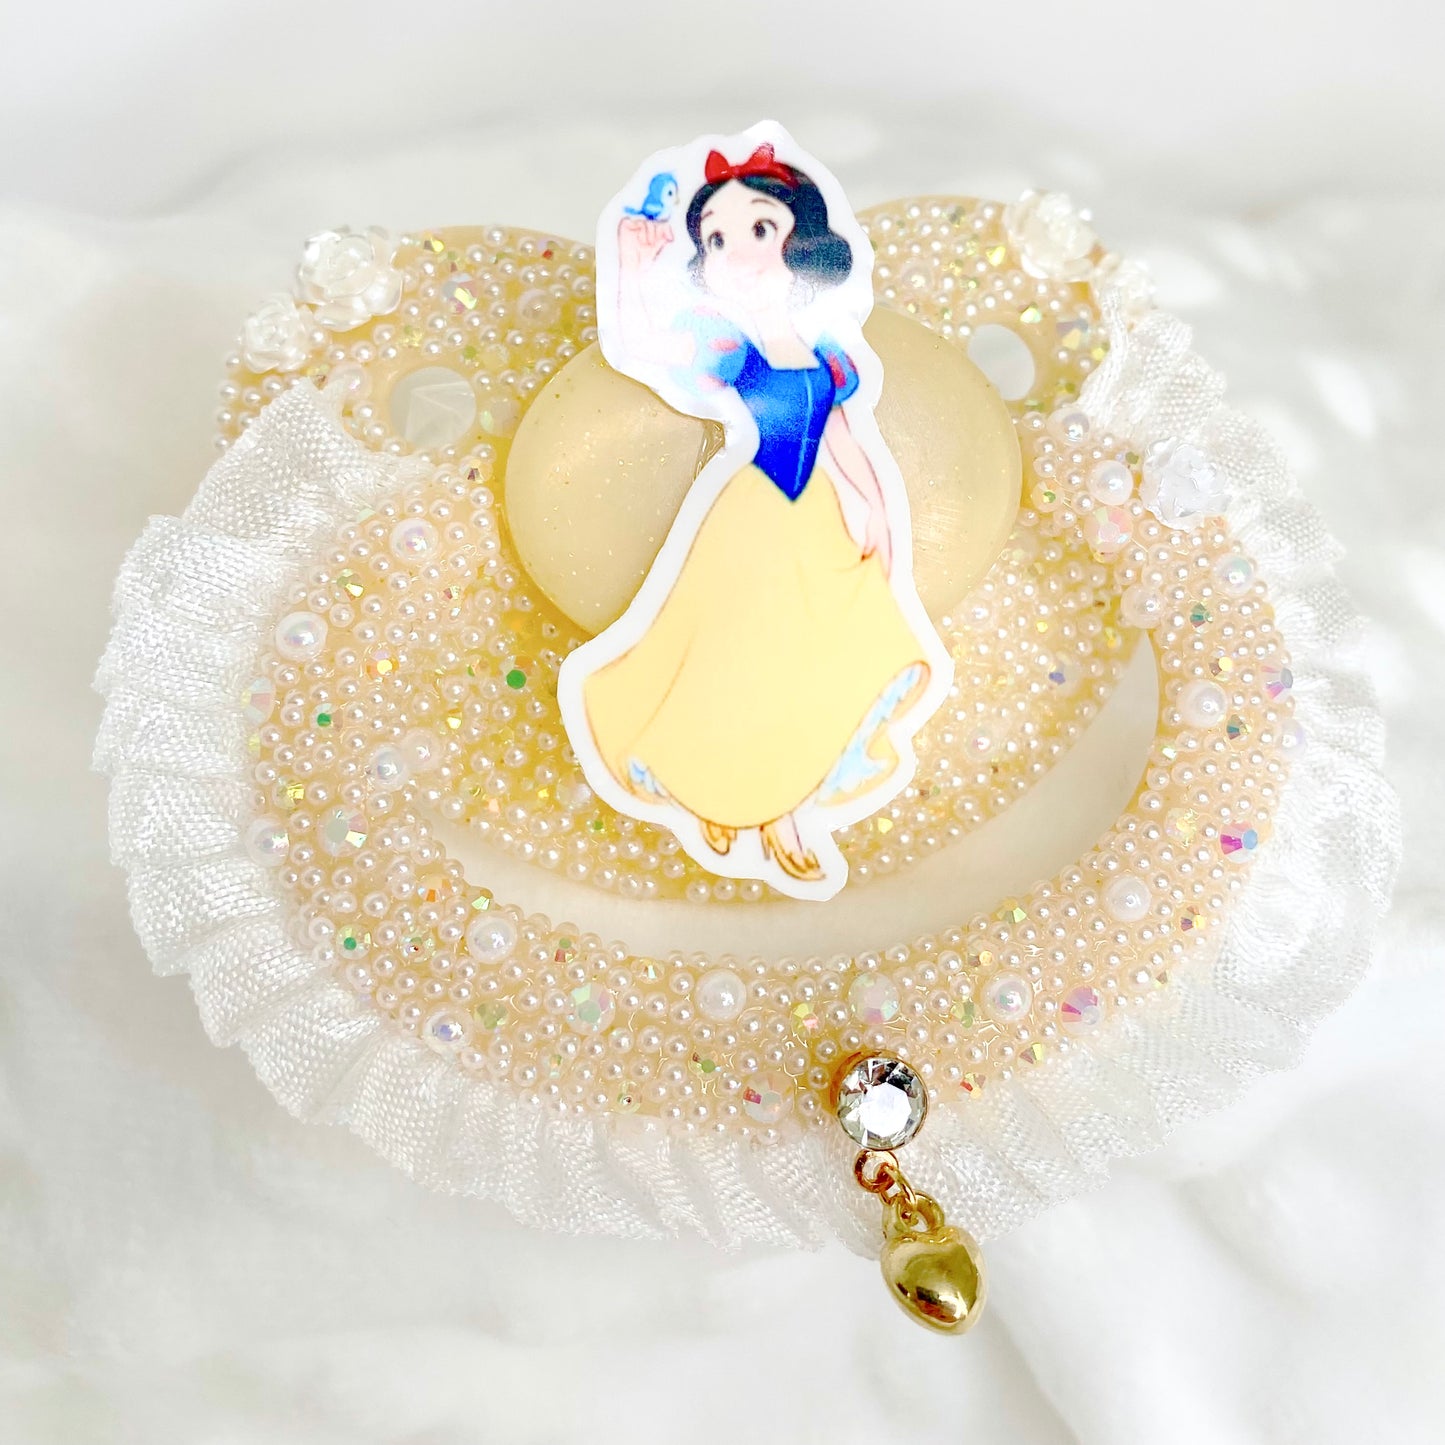 Princess Snow White - Adult pacifier